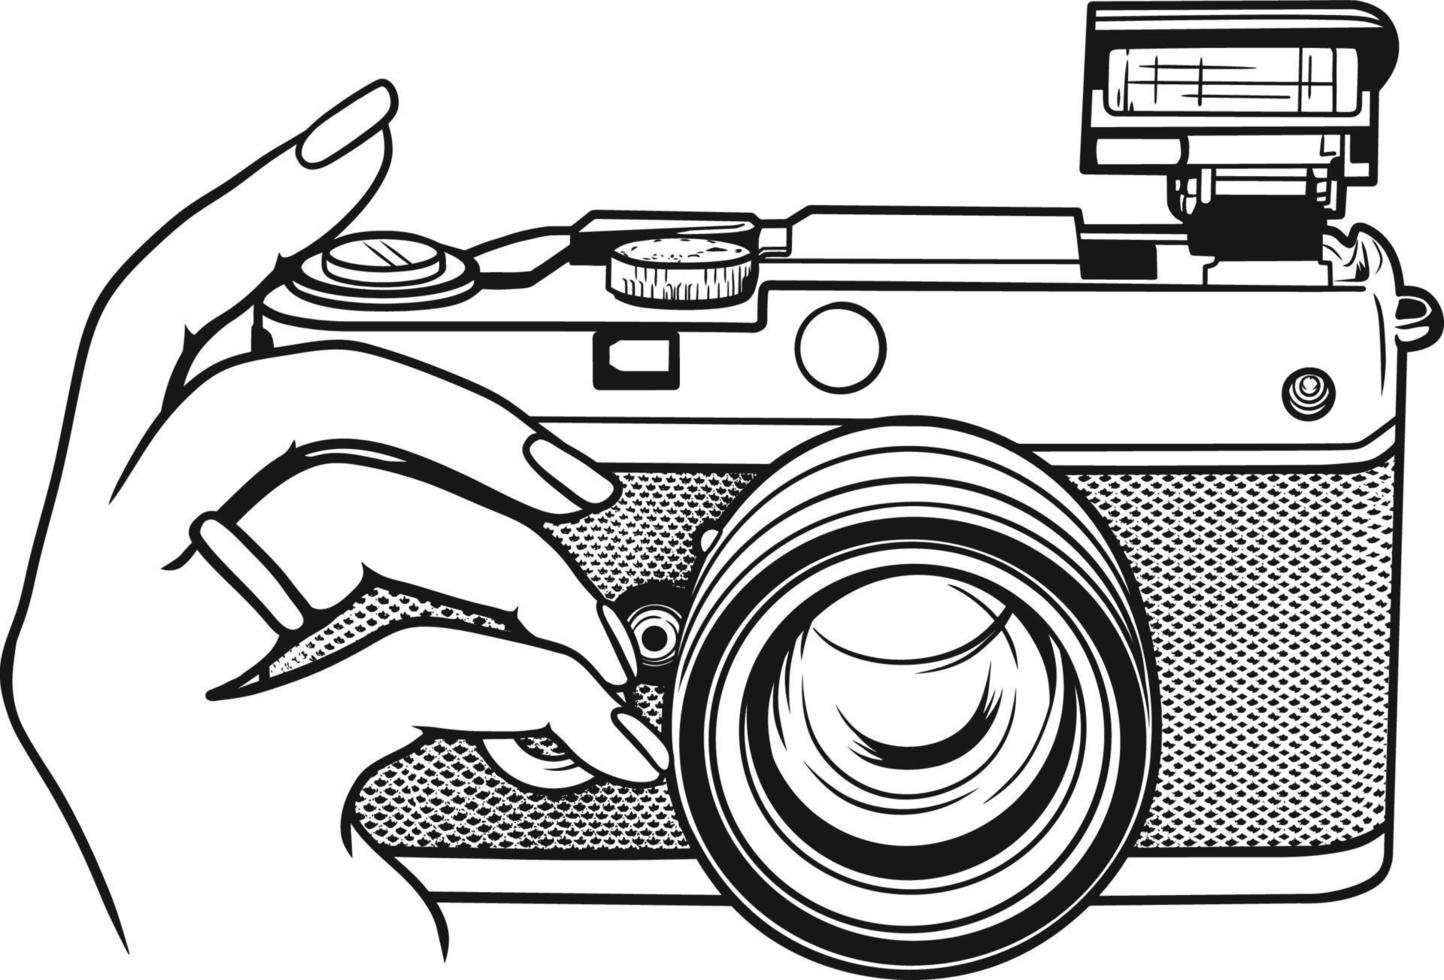 Hand holding digital camera black and white vector logo